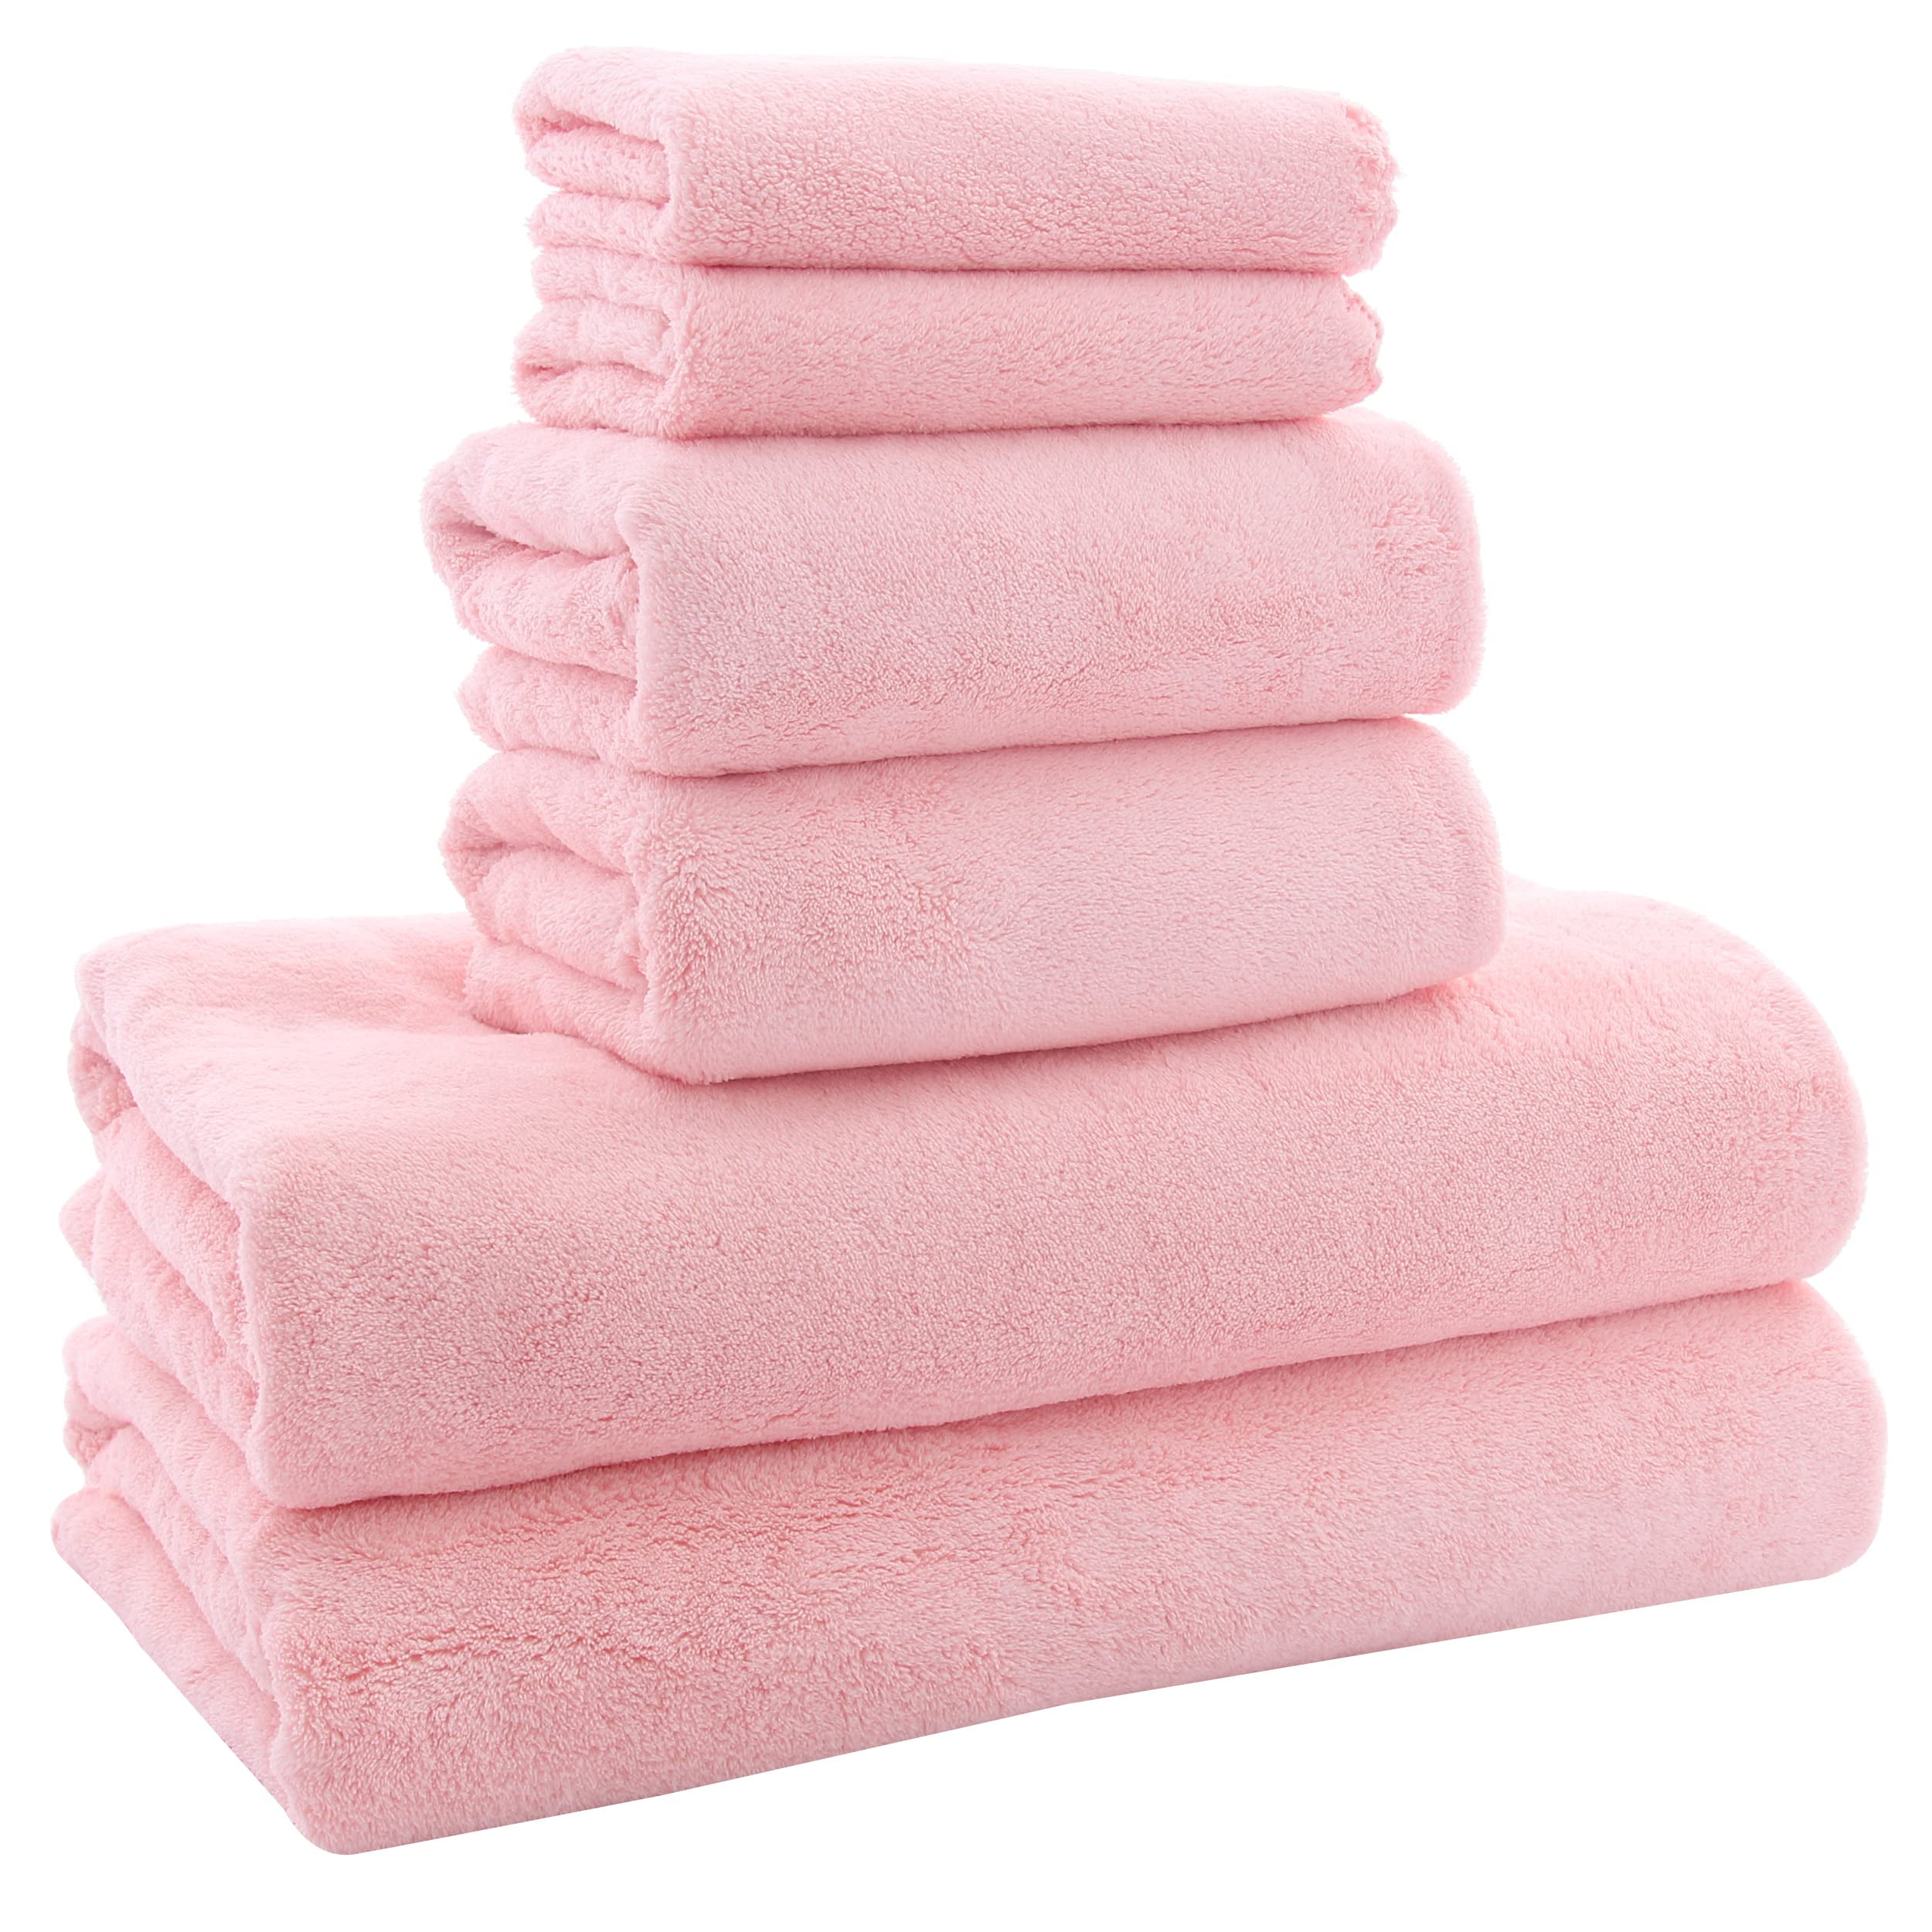 Wokaku Coral-Fleece-Towel-Quick-Dry-Extra-Large-Bath-Towel-Bathroom-Towels-Bath-Sheet-Towels-Large-Bathroom-Big-Bath-Towels-Super-Soft-Large-Towel (